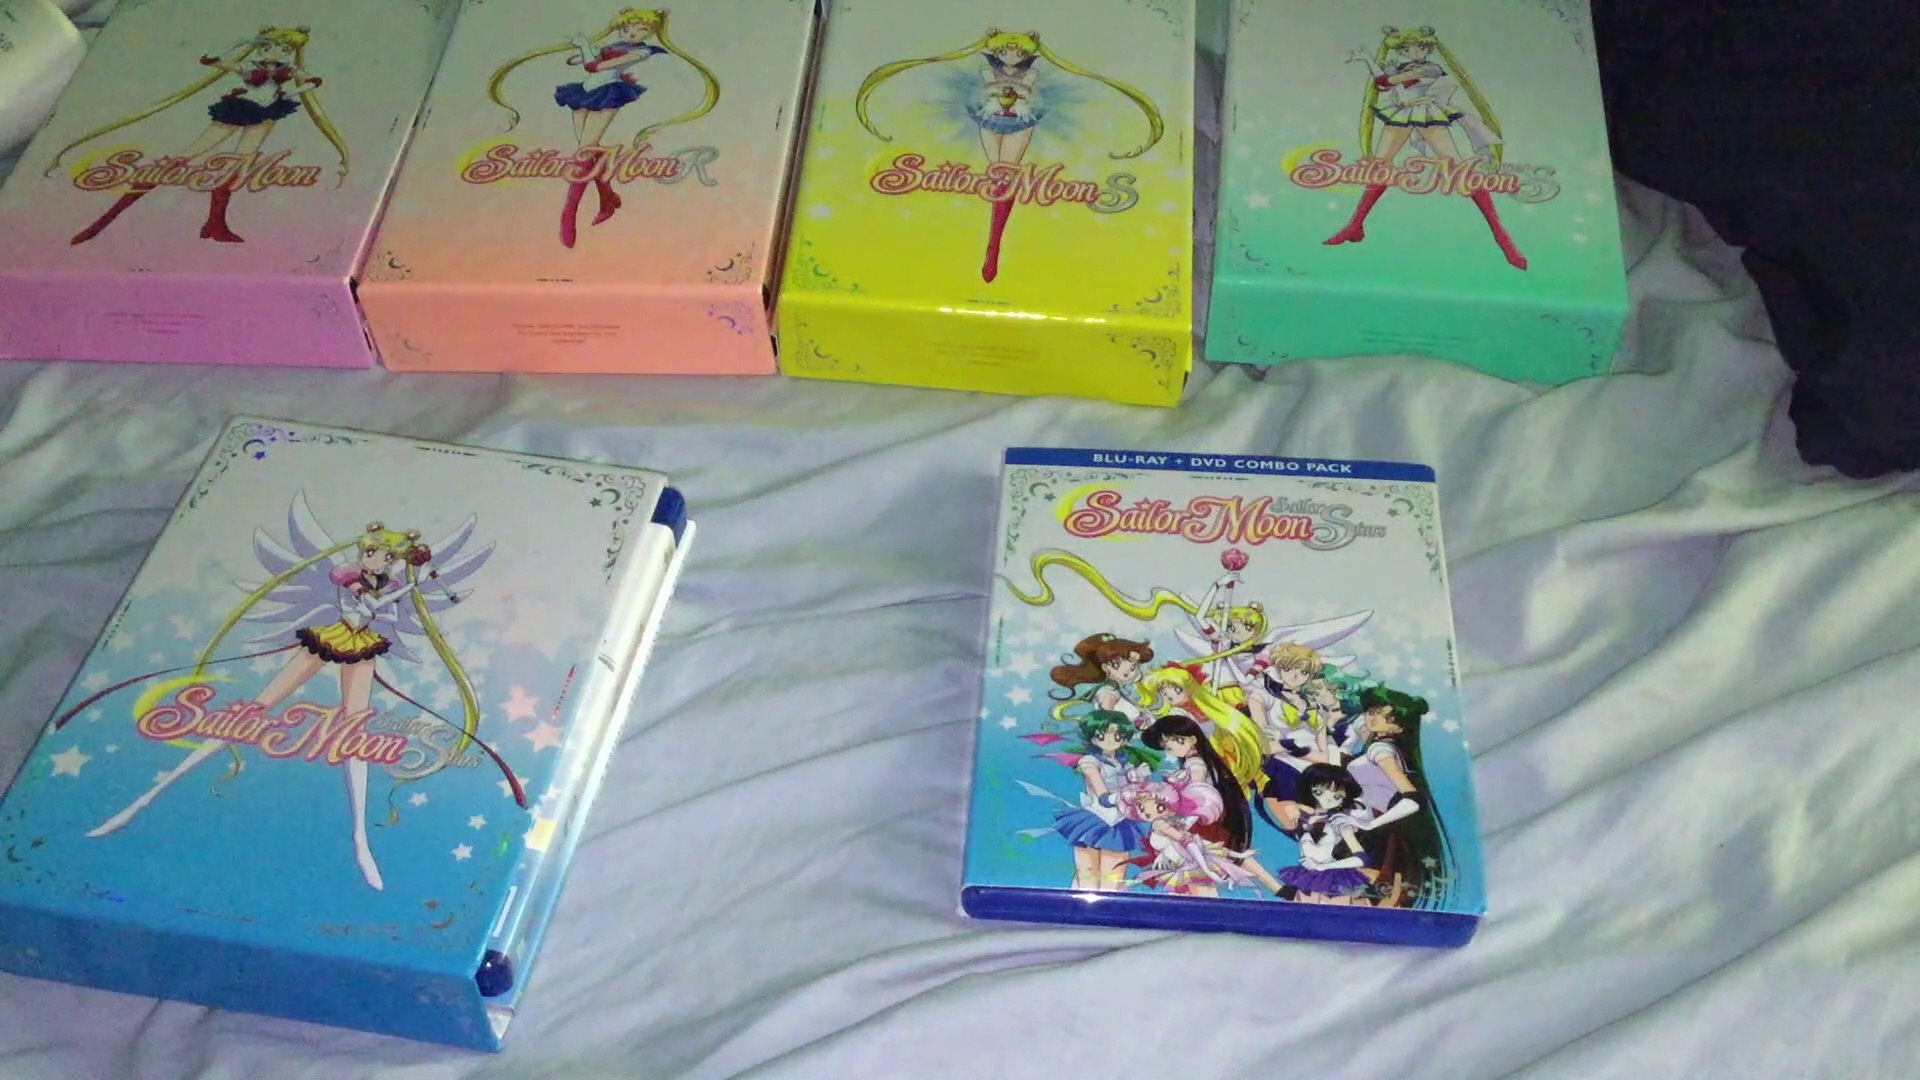 Sailor Moon S: The Complete Third Season (Blu-ray) 